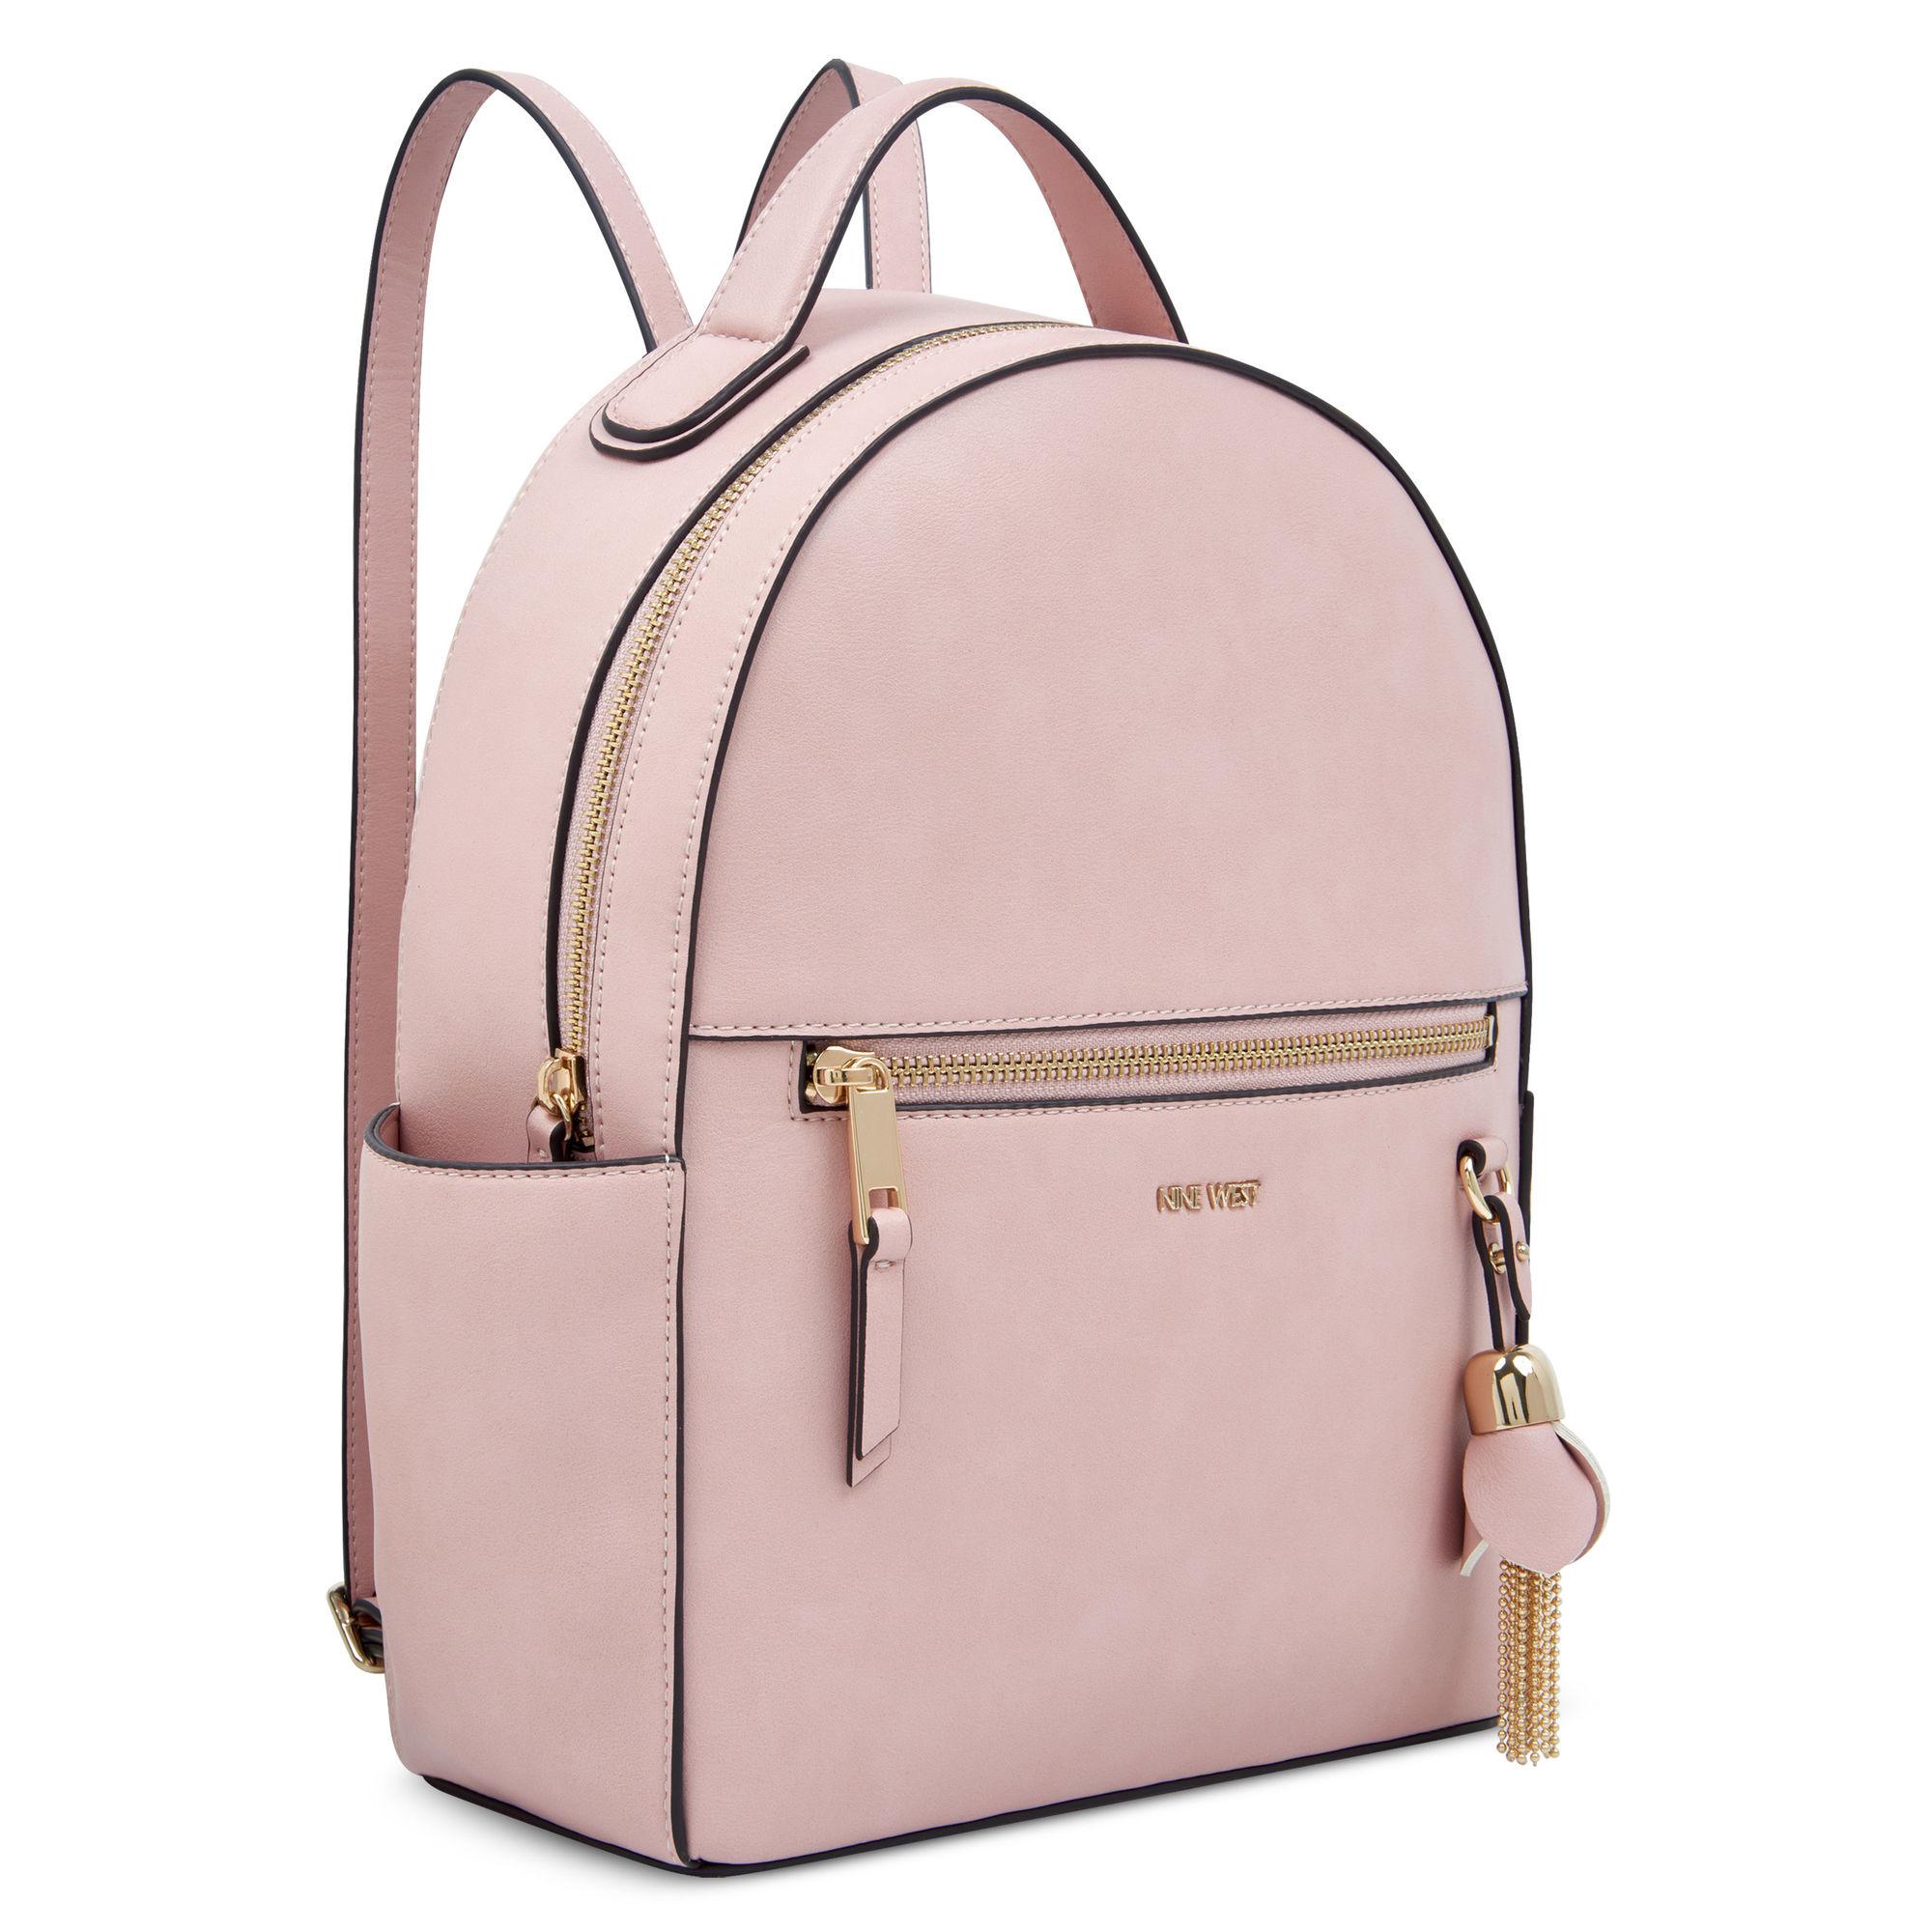 Nine West Briar Backpack in Pink - Lyst